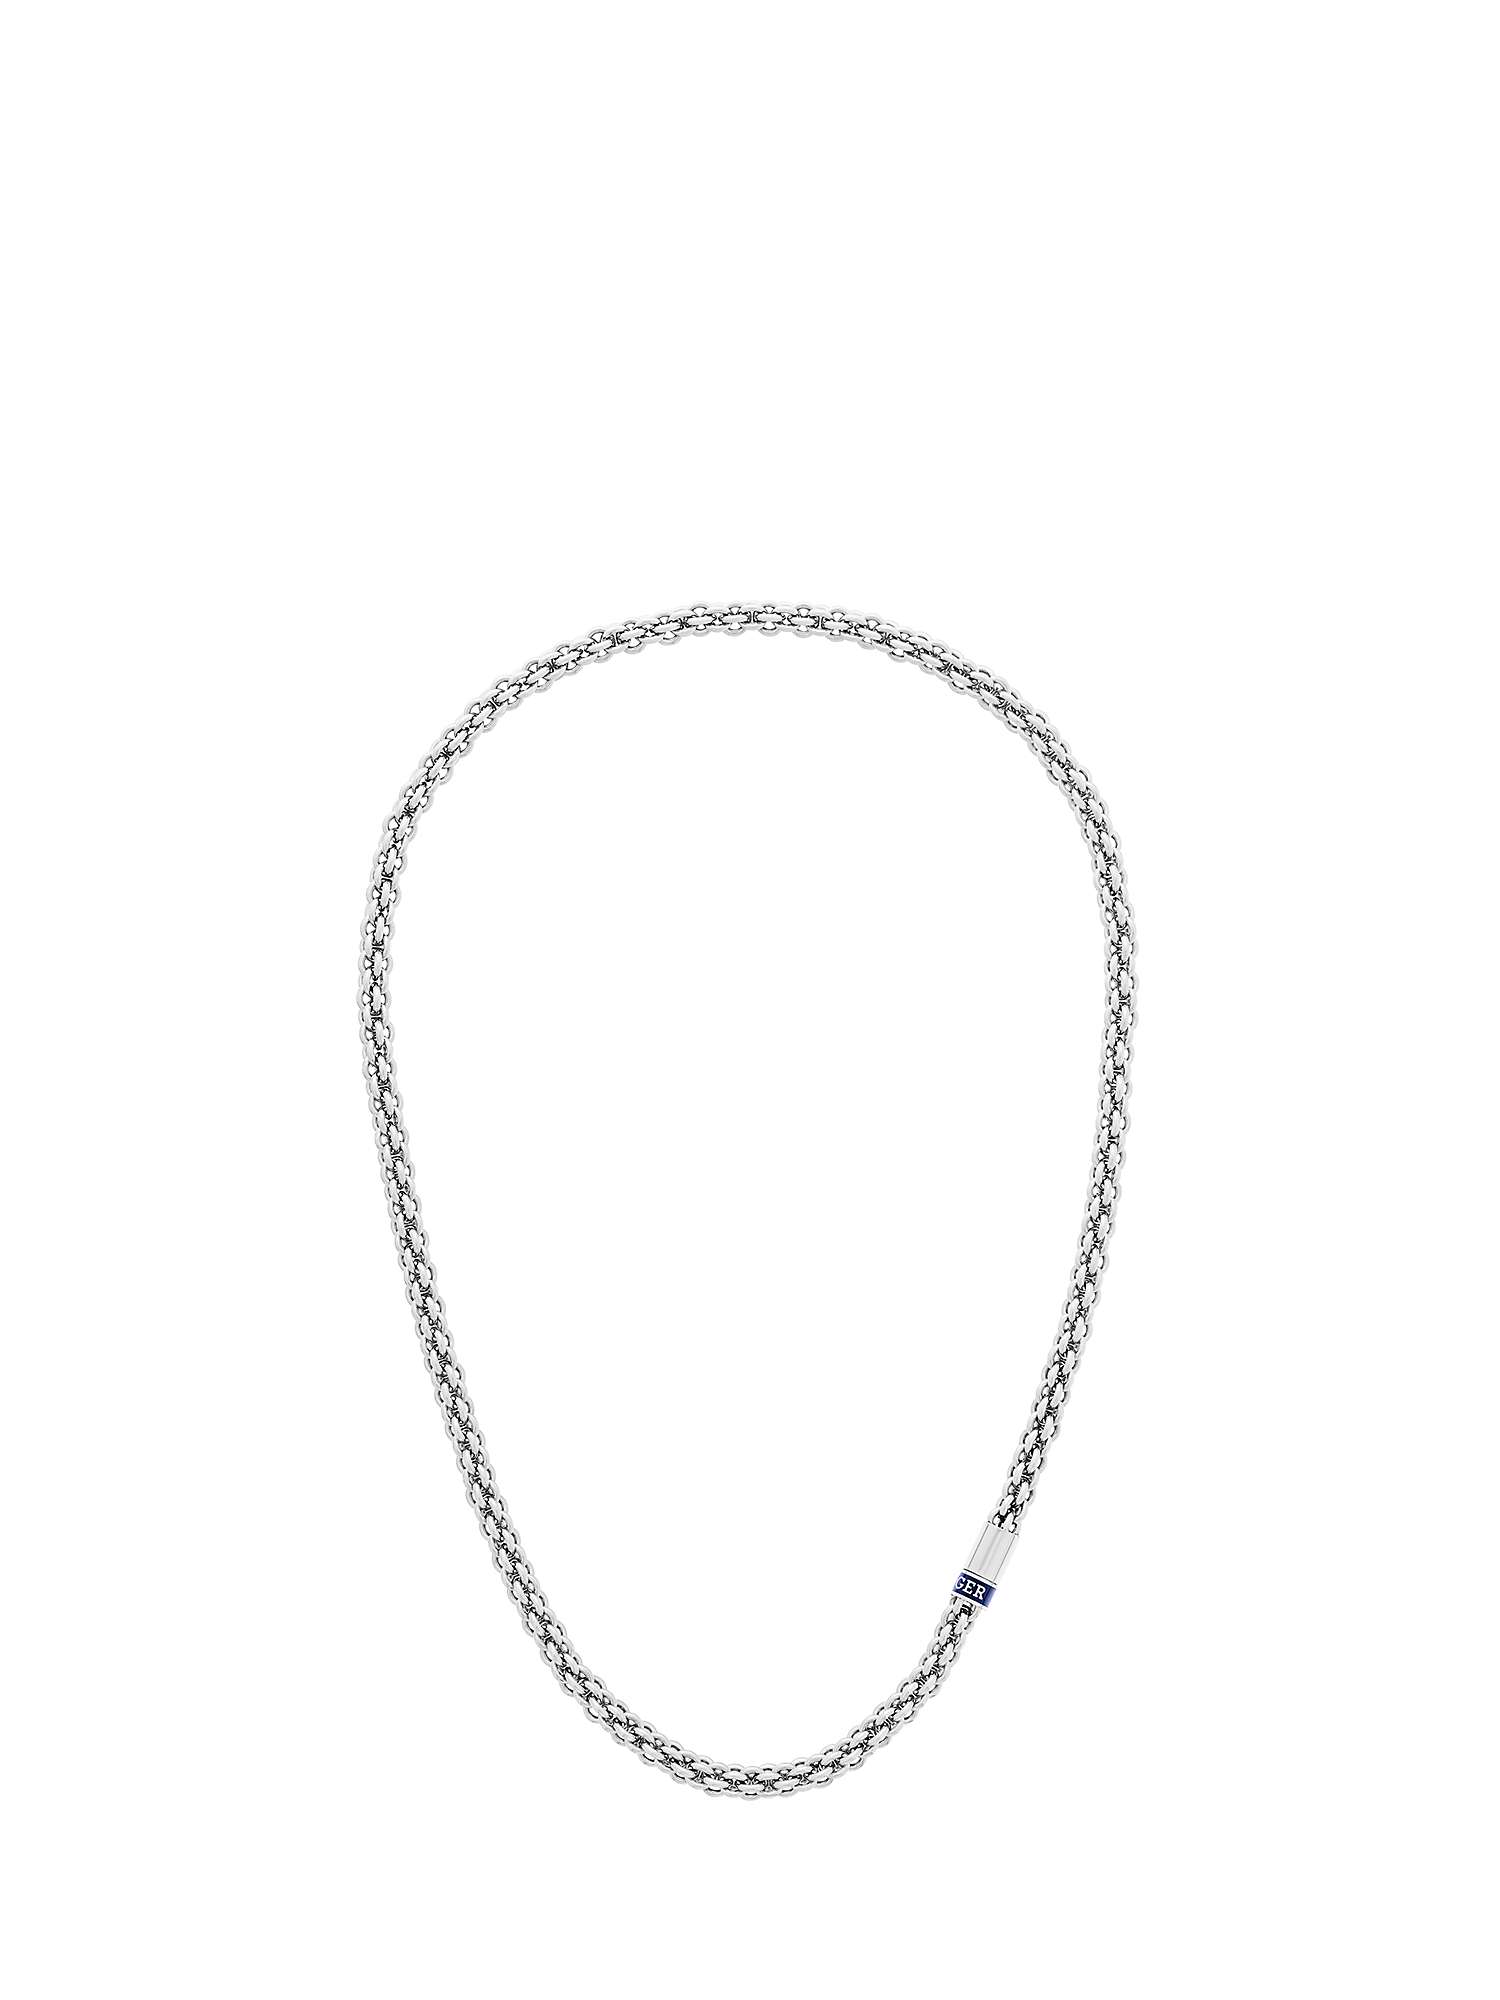 Buy Tommy Hilfiger Men's Interlinked Chain Necklace, Silver Online at johnlewis.com